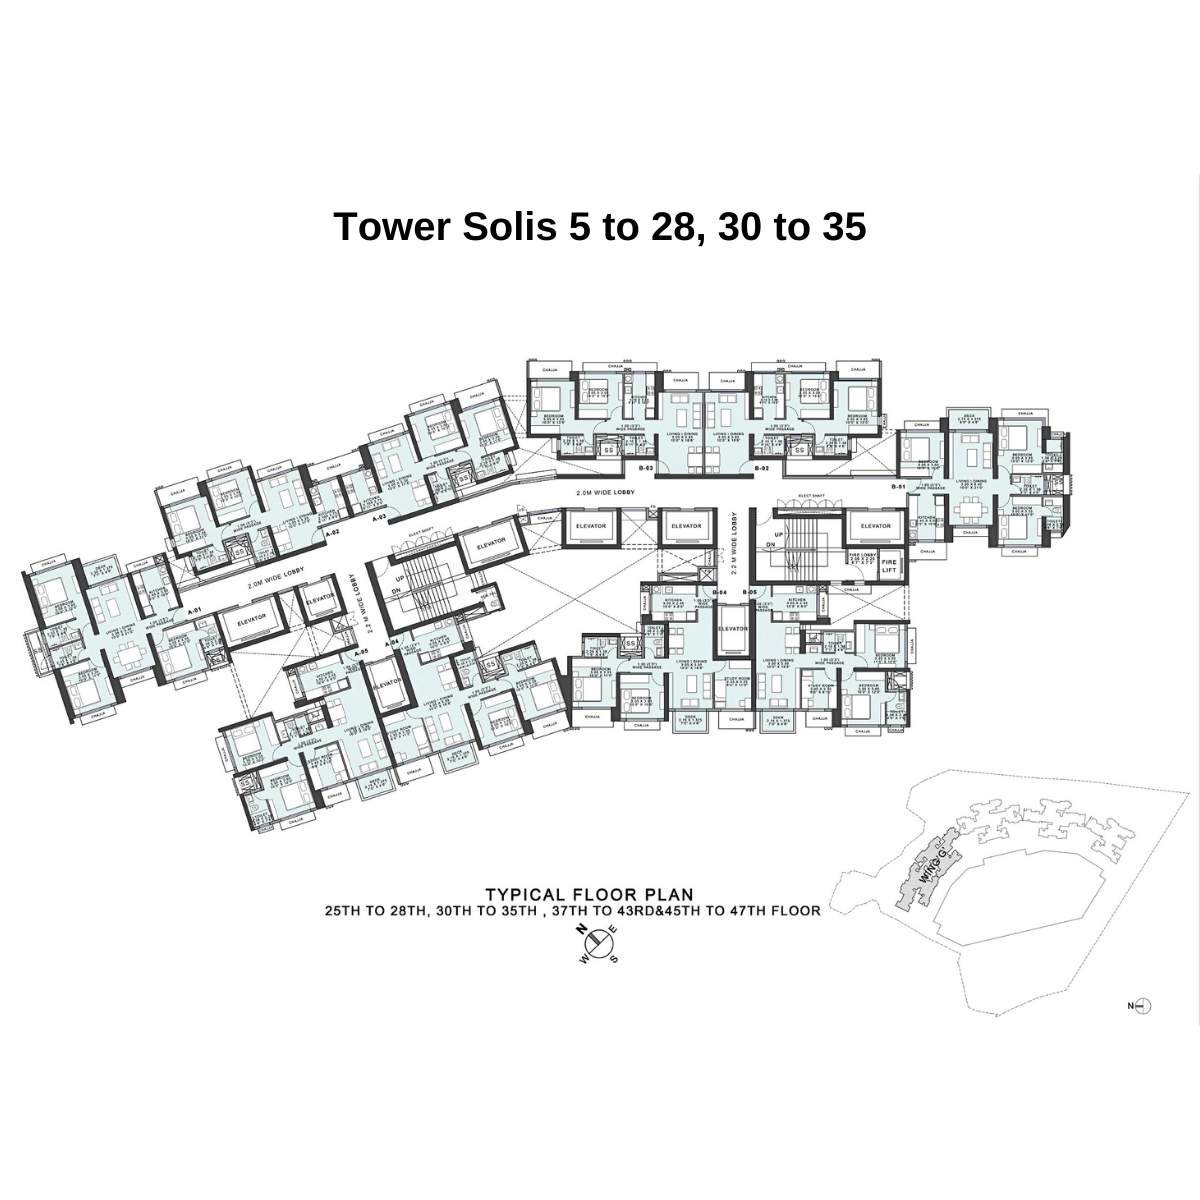 Wadhwa-Atmosphere-Floor-Plan-Tower-Solis-5-to-28,30-to-35